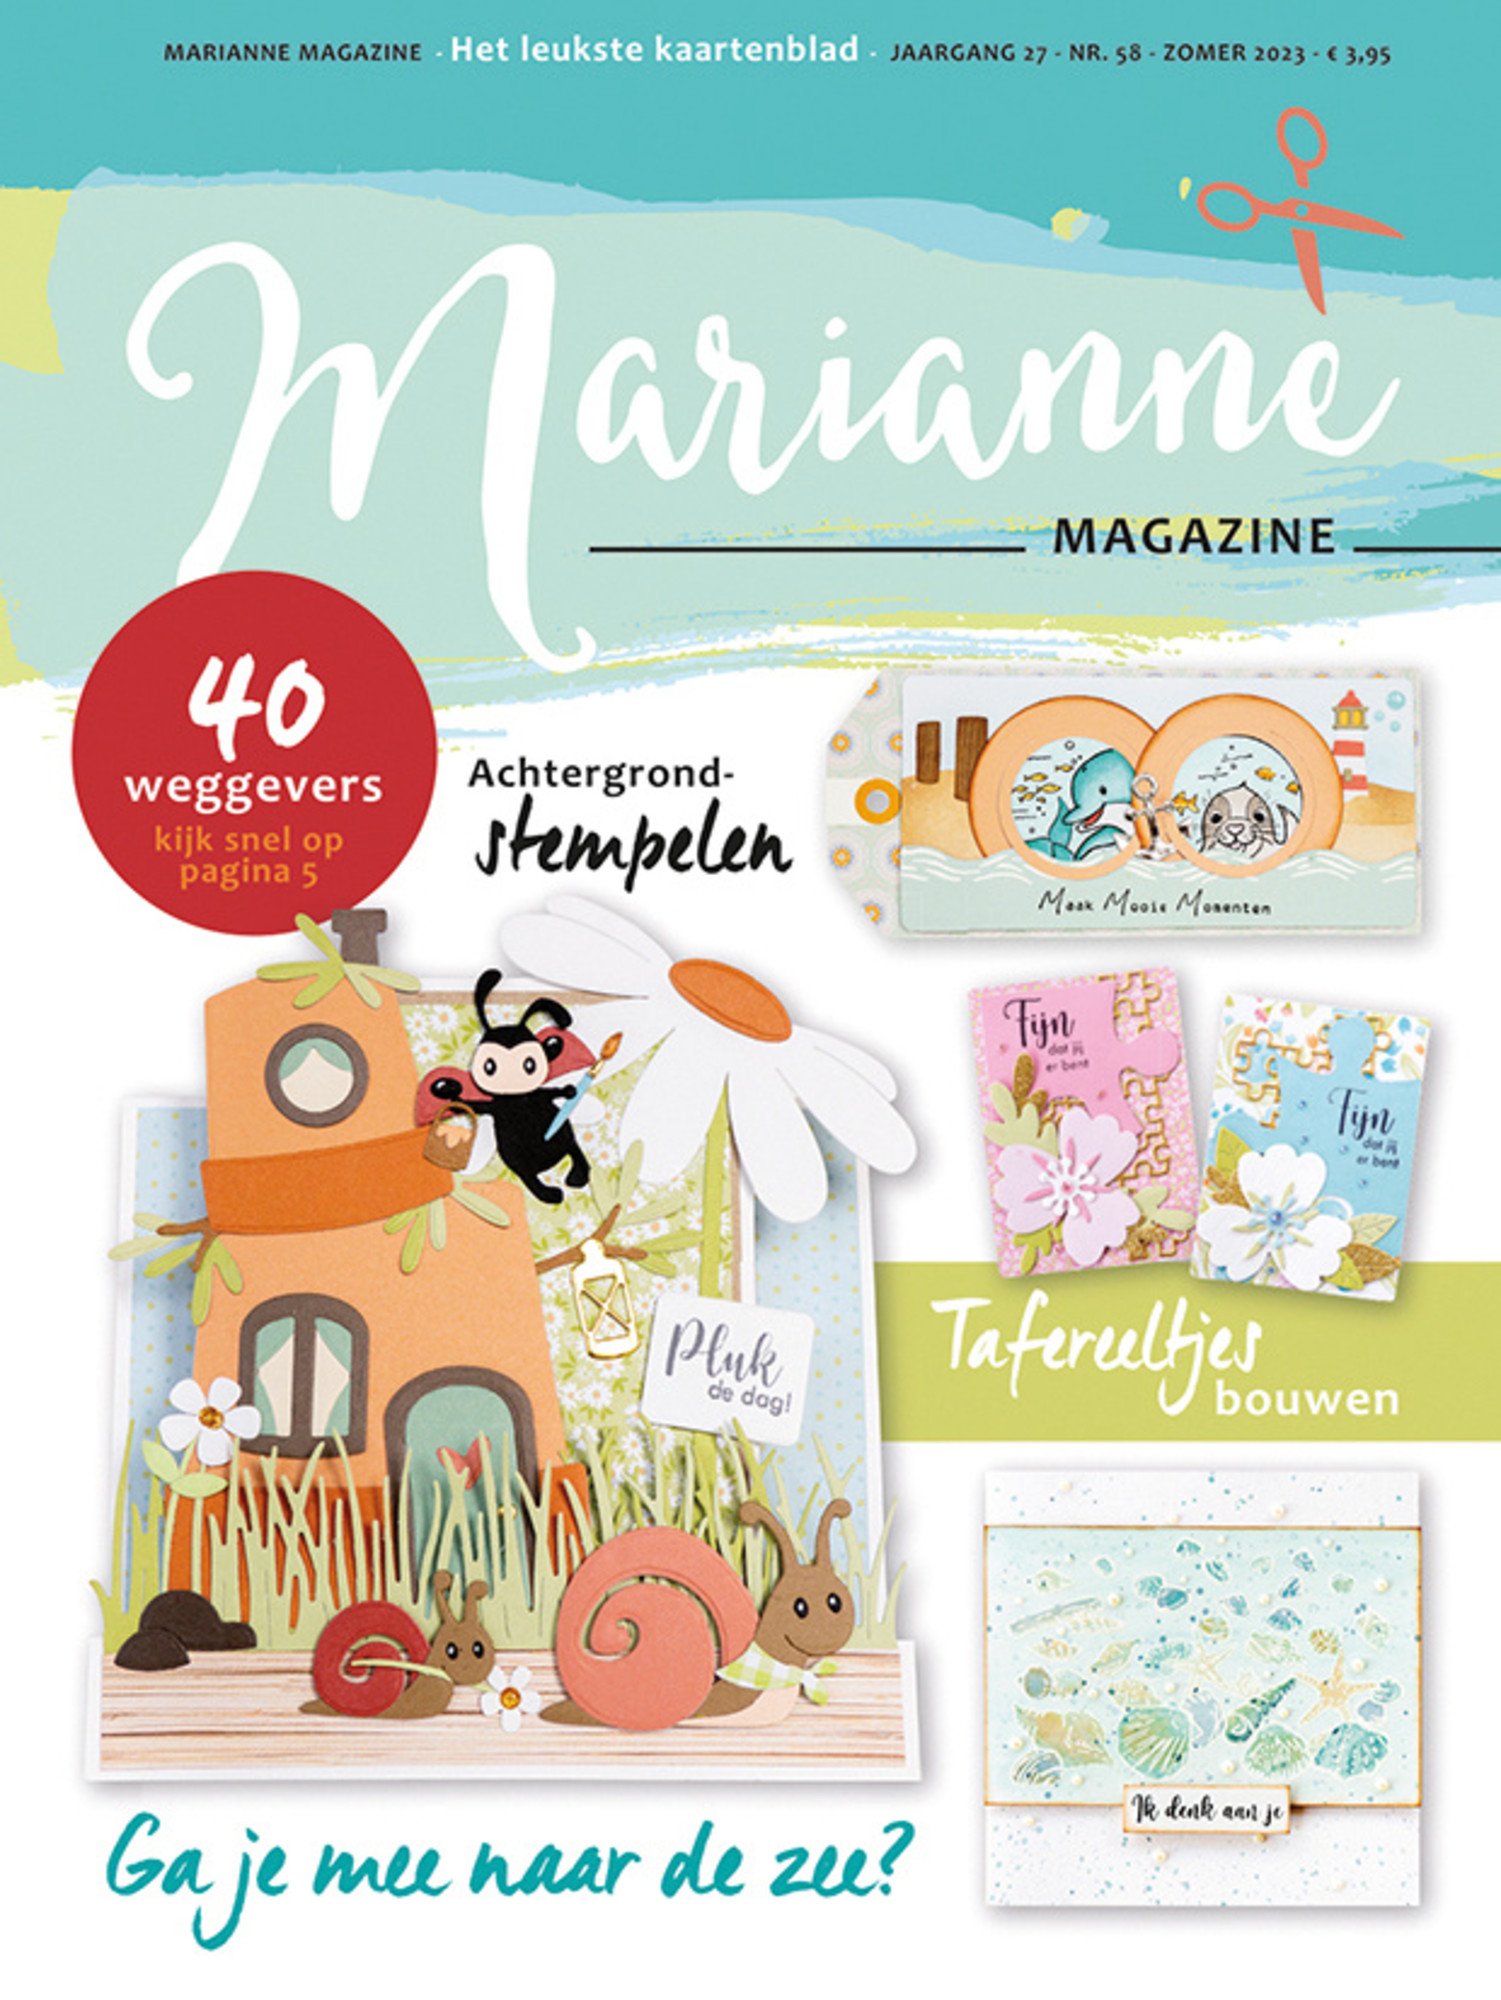 Marianne D Magazine Marianne nr 58